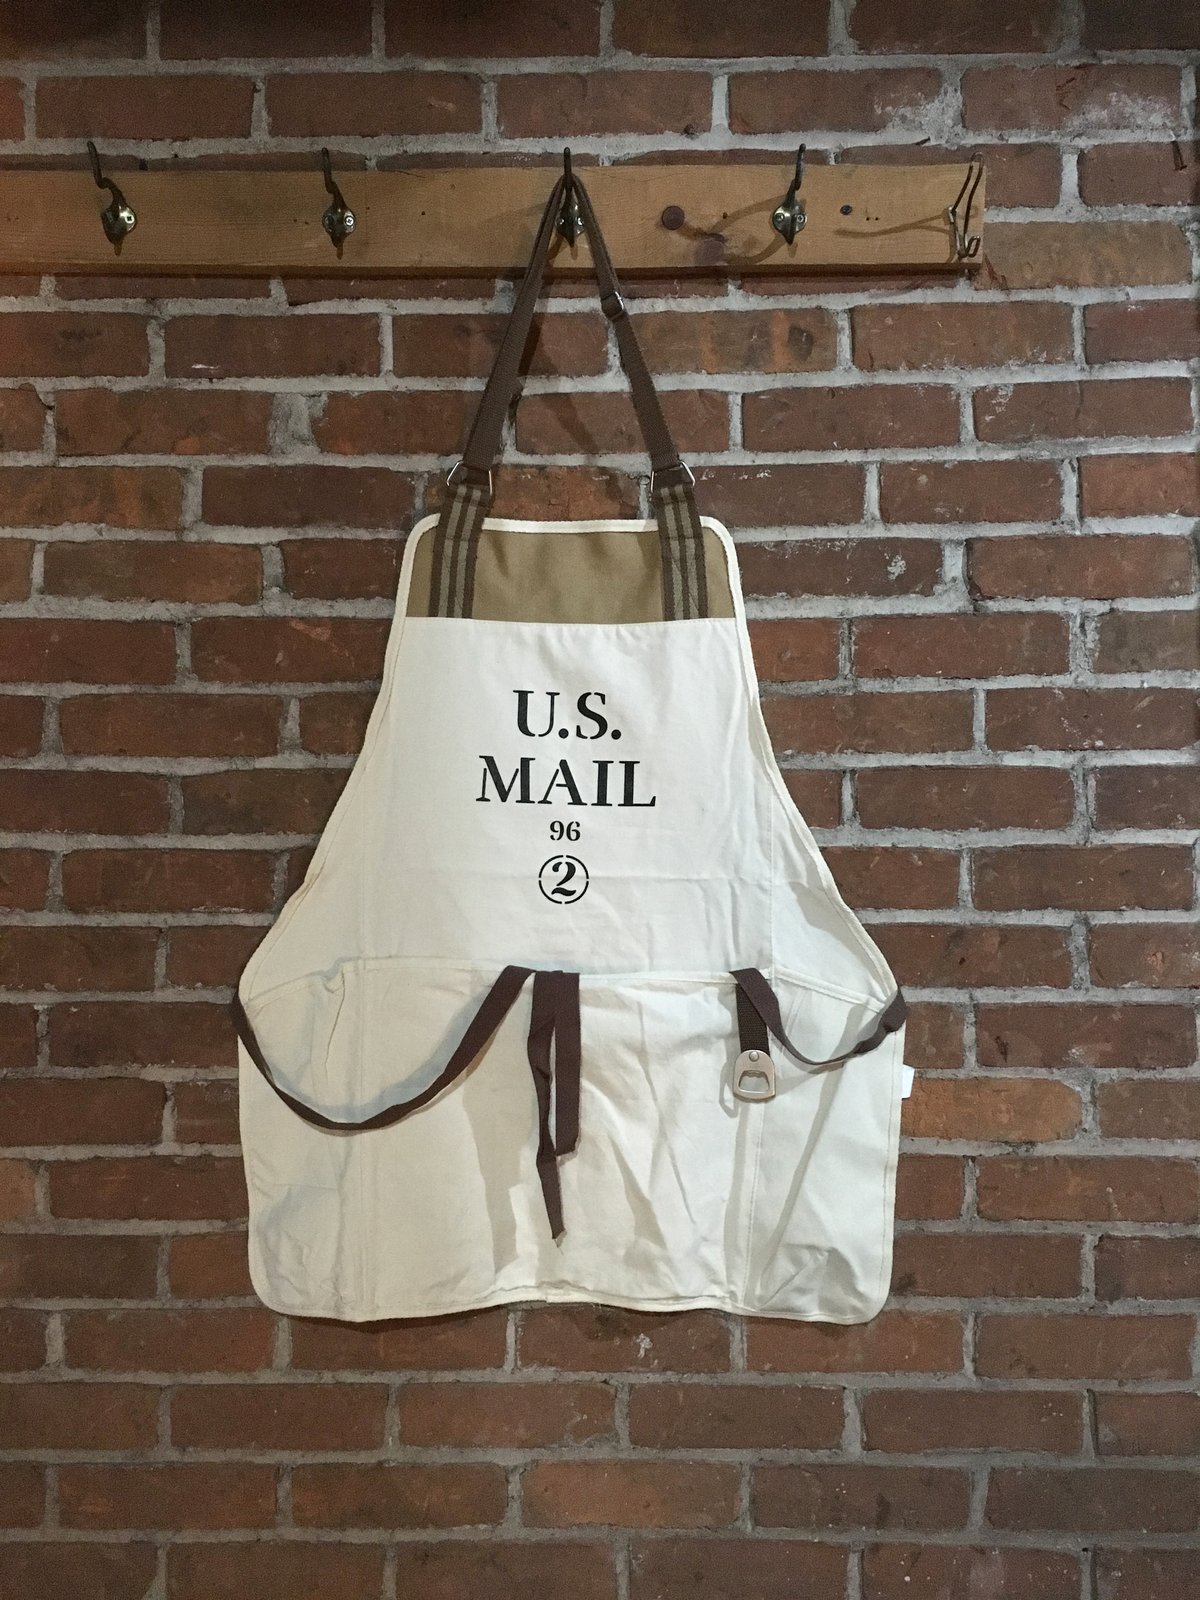 Image of U.S. Mail Bag Apron